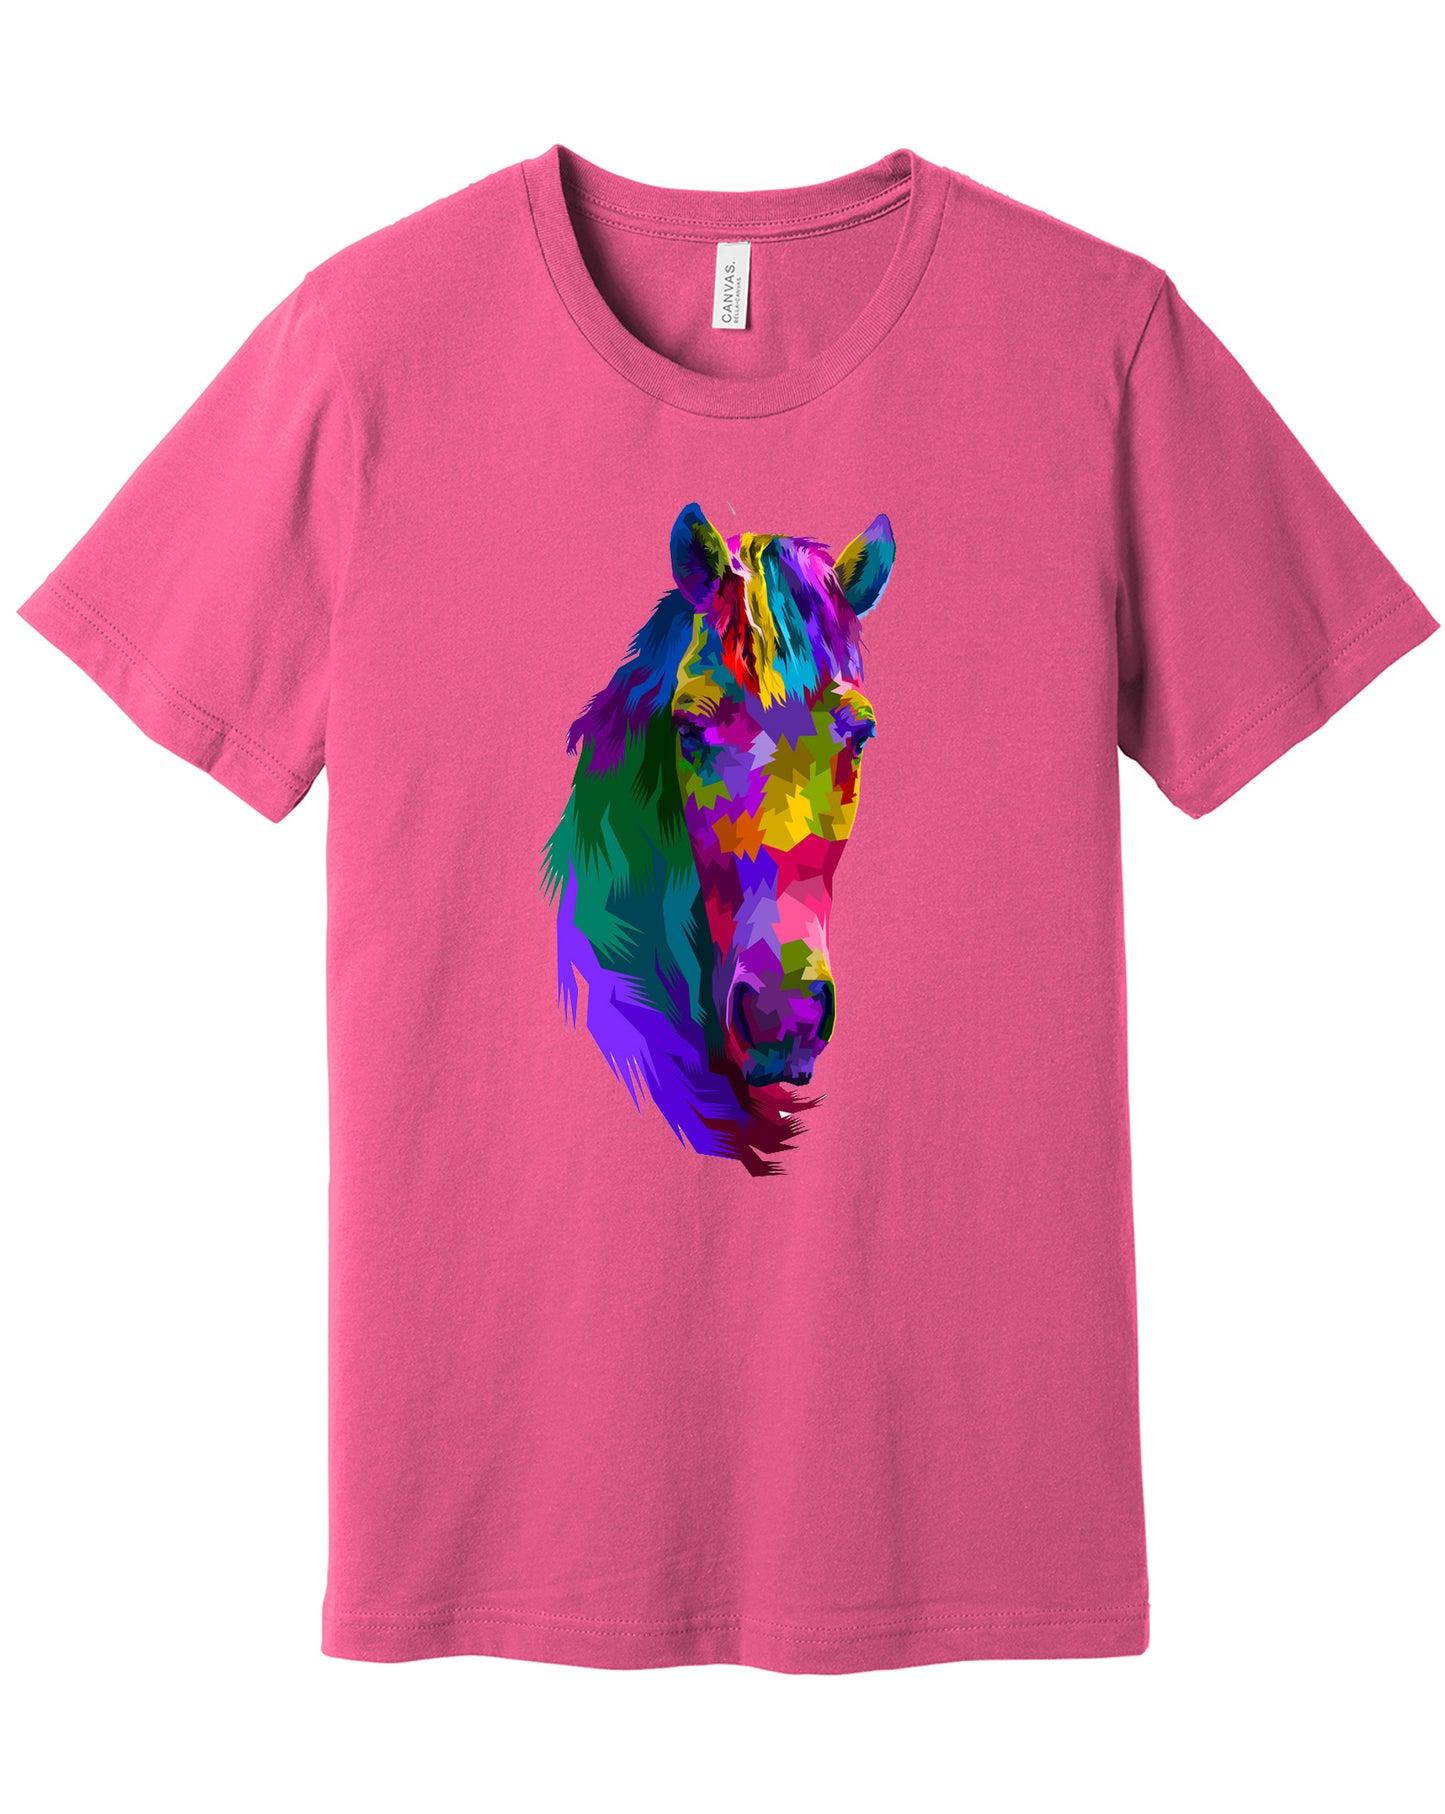 Horse Head - Colorful